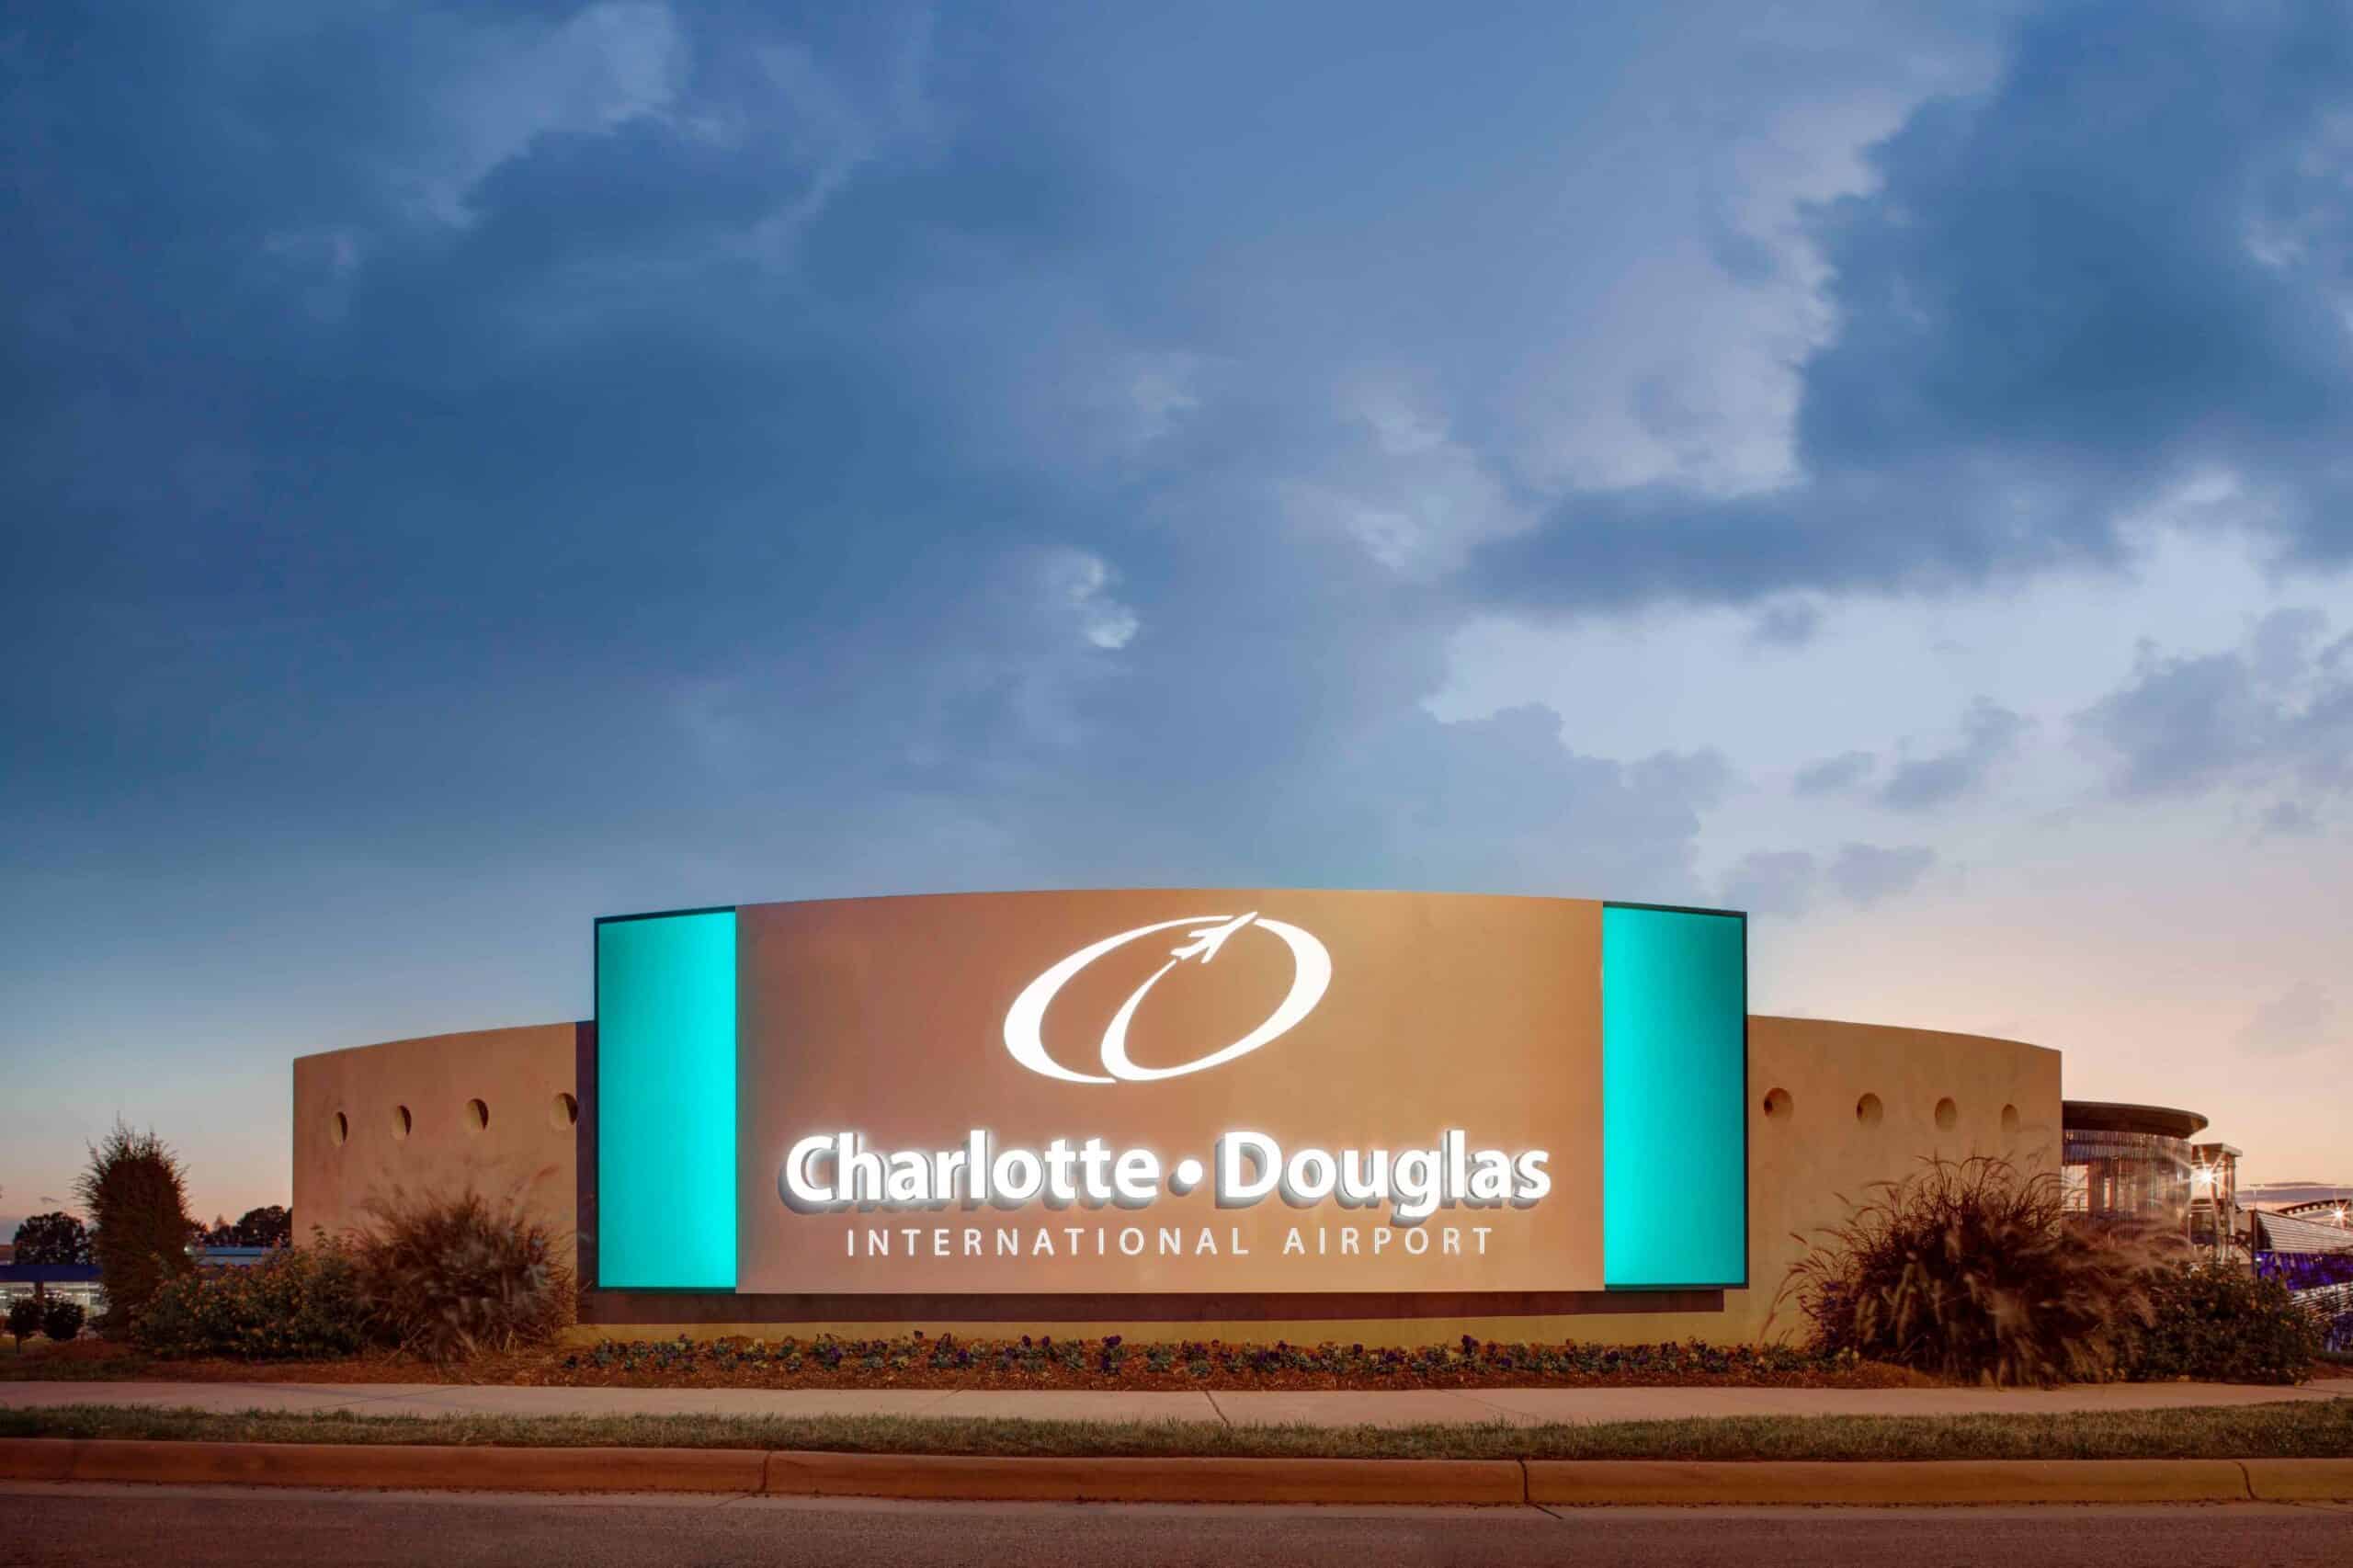 Charlotte Douglas Airport